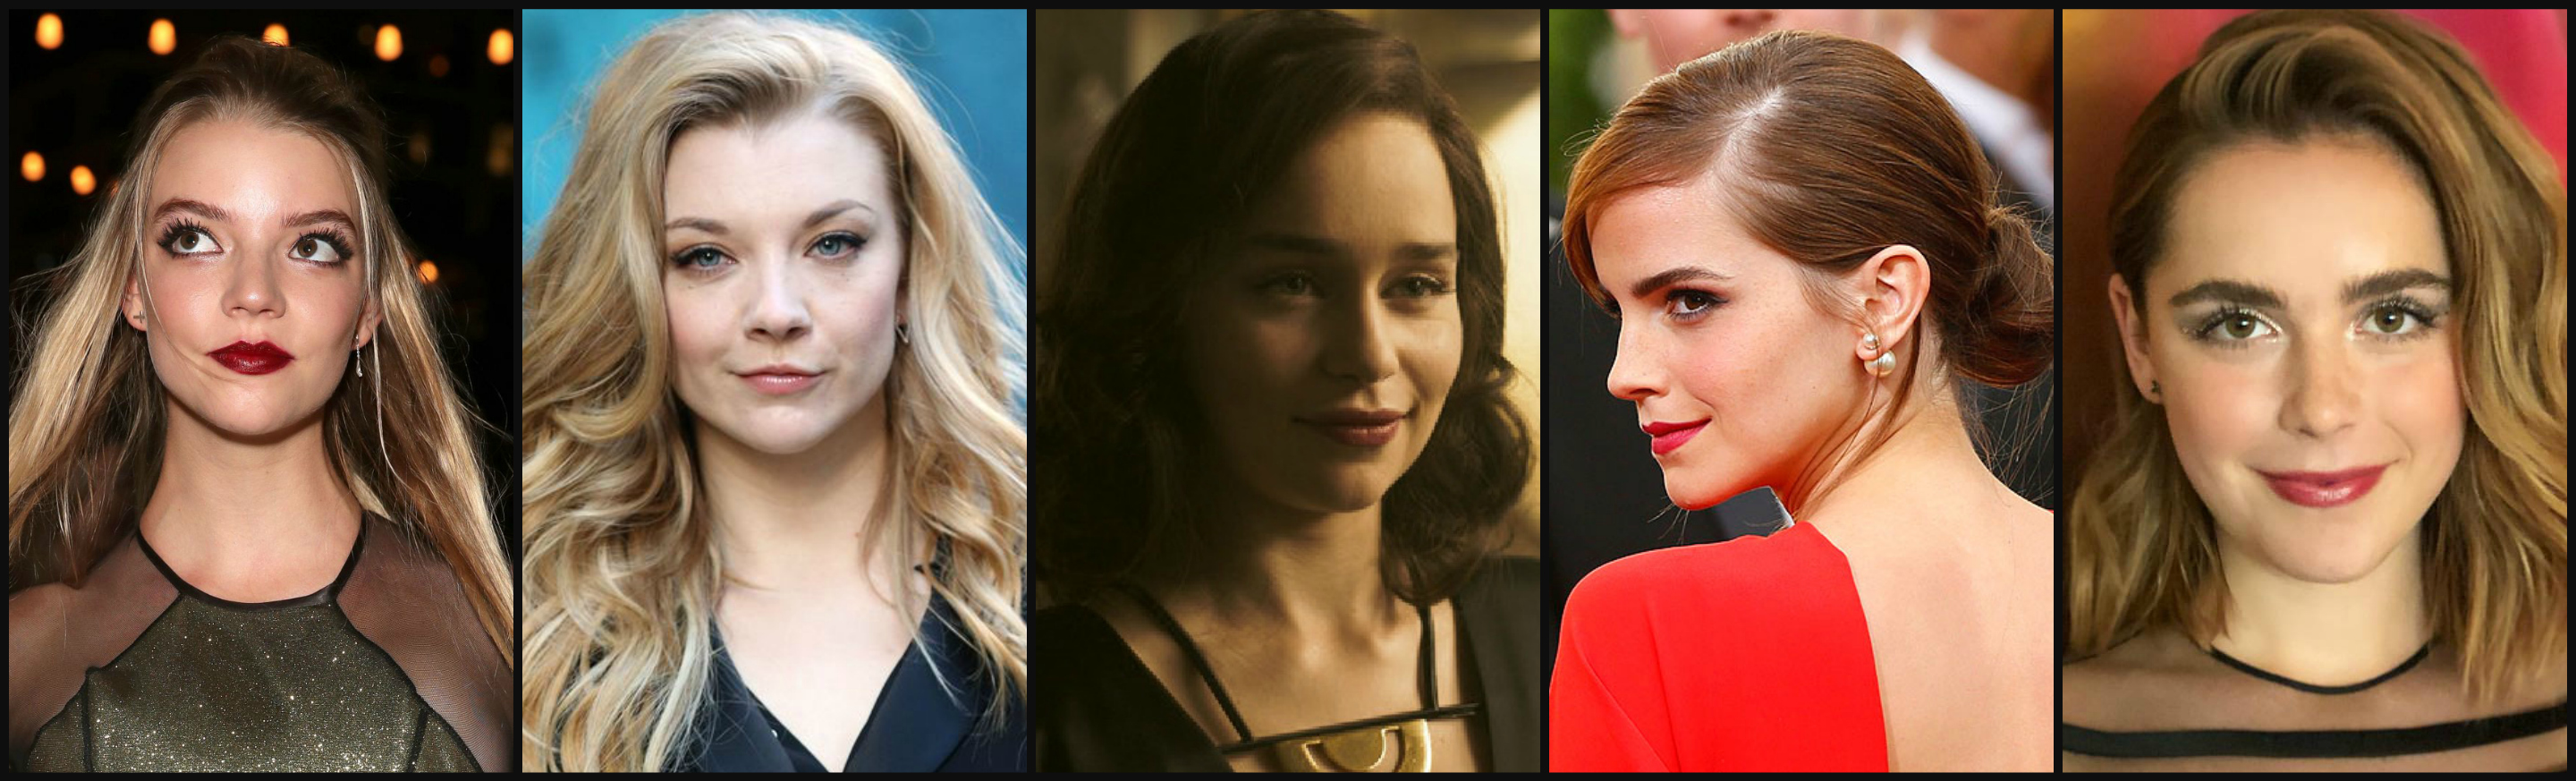 Teasing Smirks Anya Taylor Joy Natalie Dormer Emilia Clarke Emma Watson Kiernan Shipka 